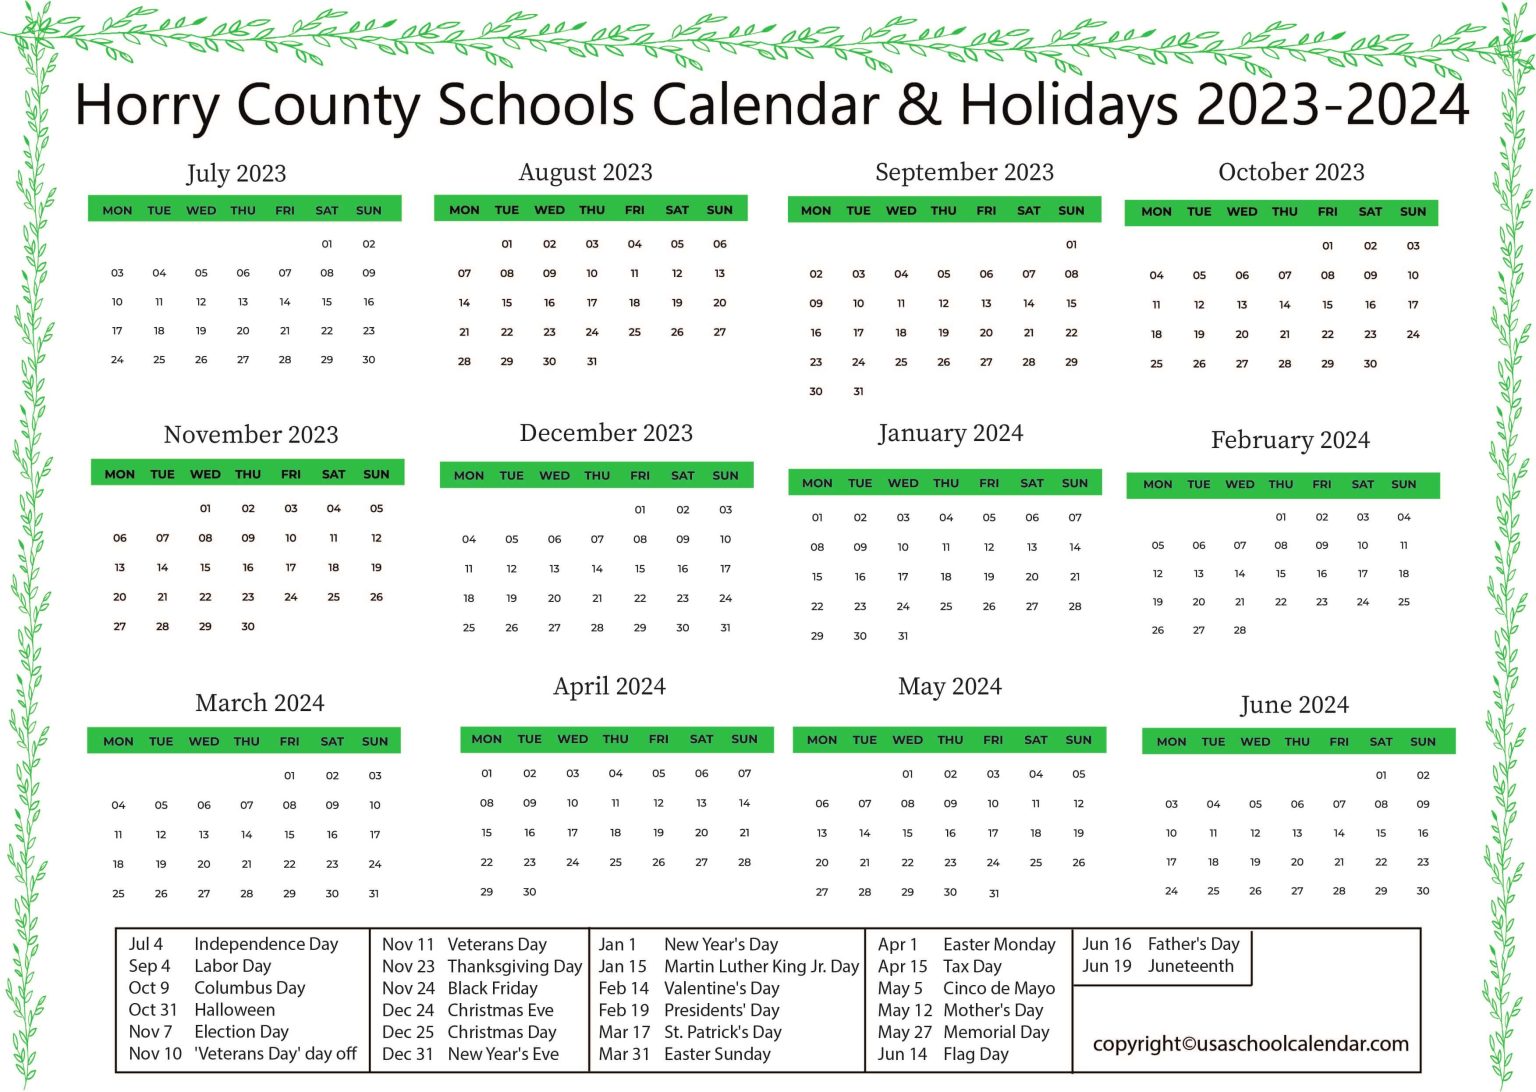 Horry County Schools Calendar & Holidays 2023-2024